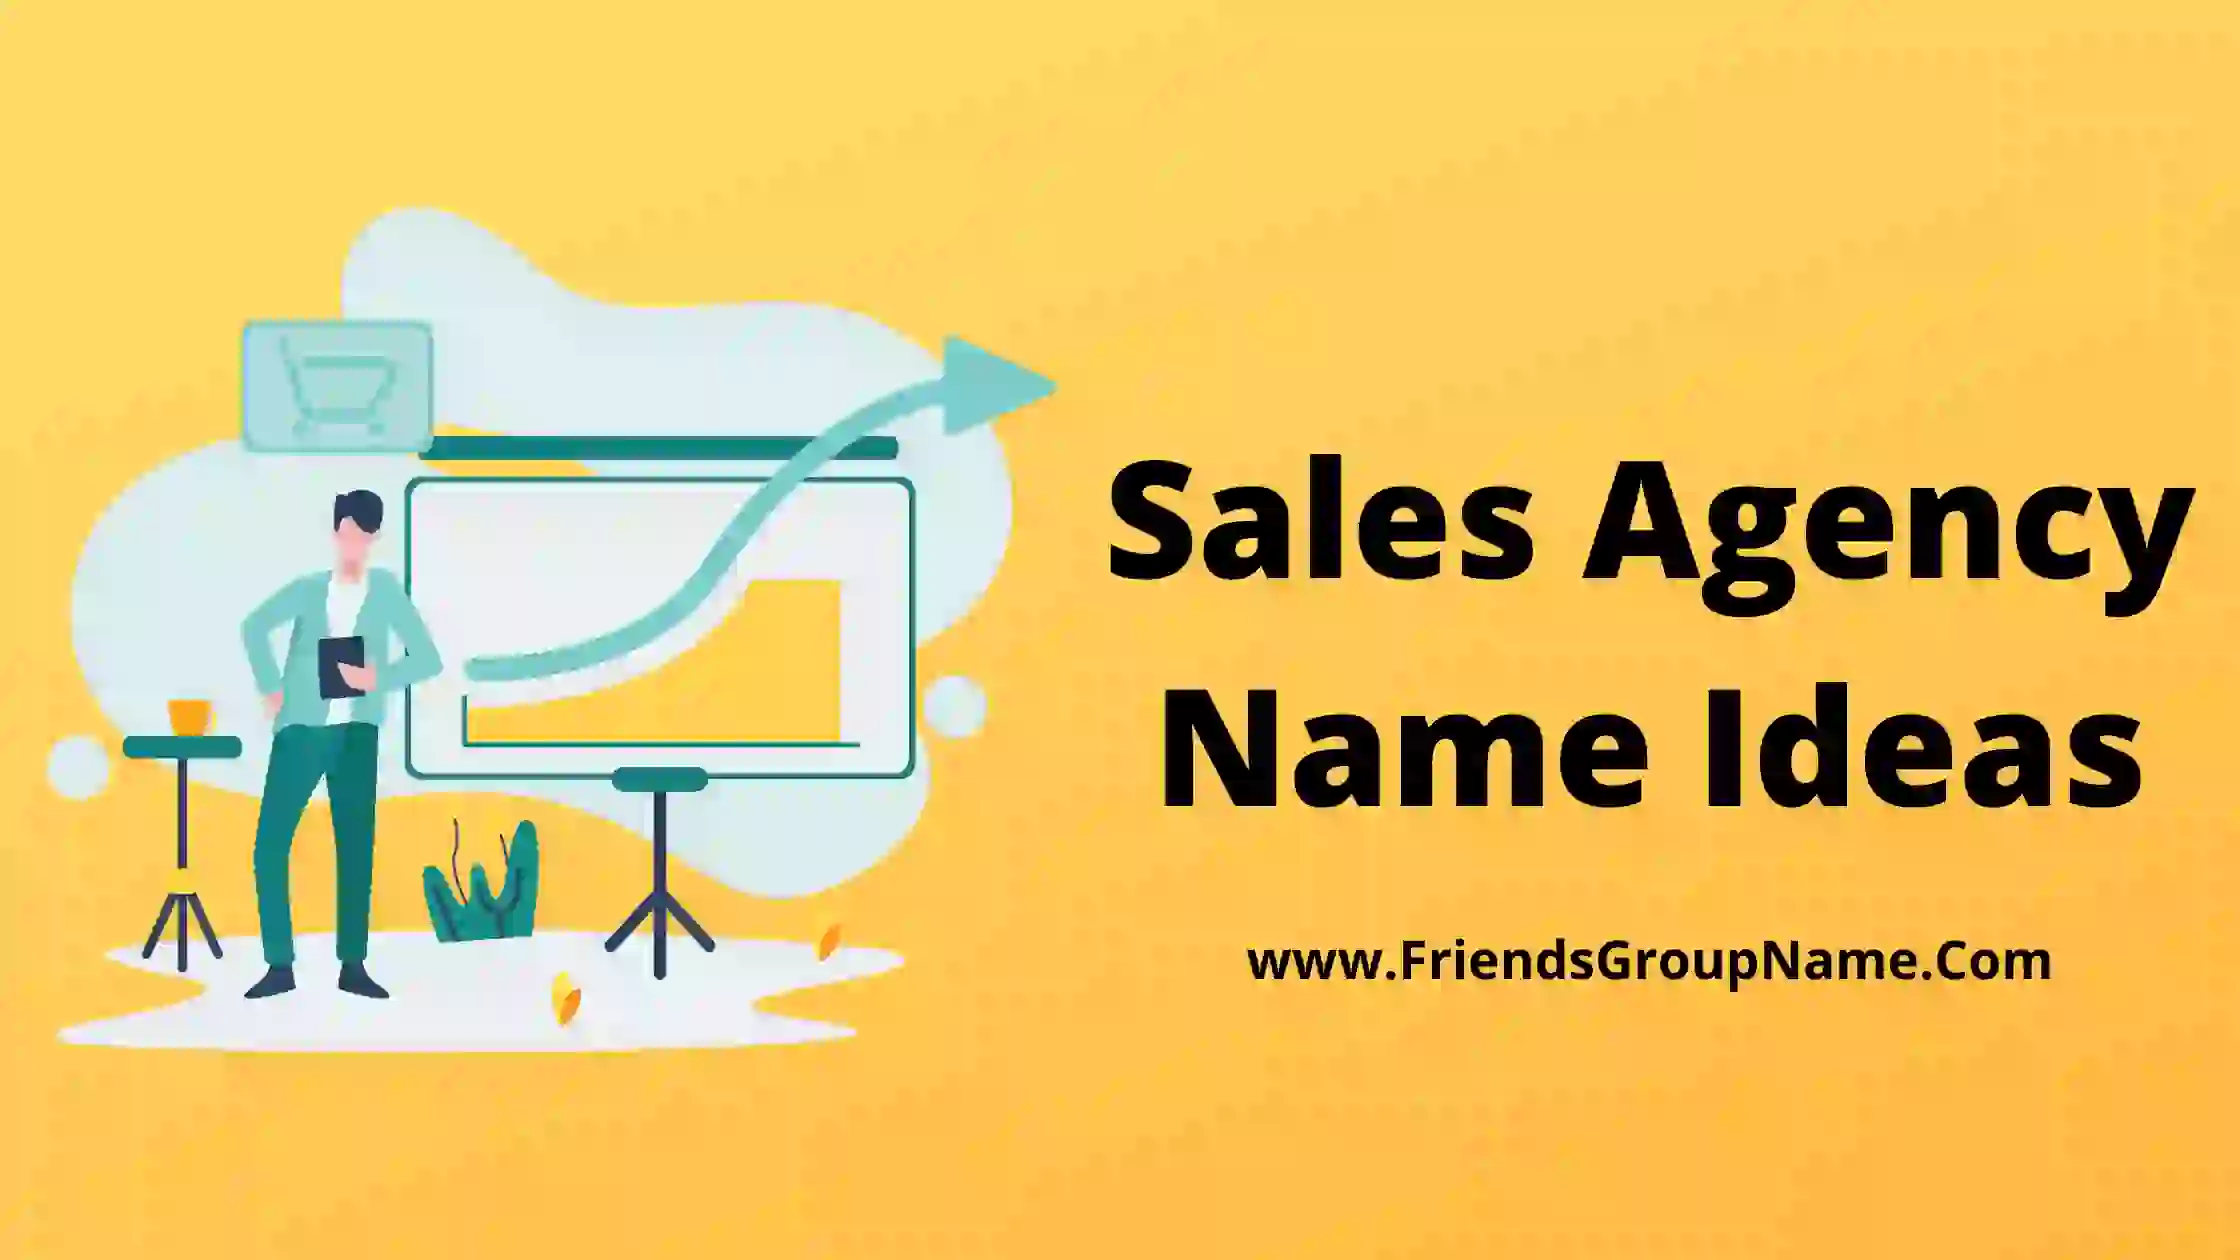 Sales Agency Name Ideas